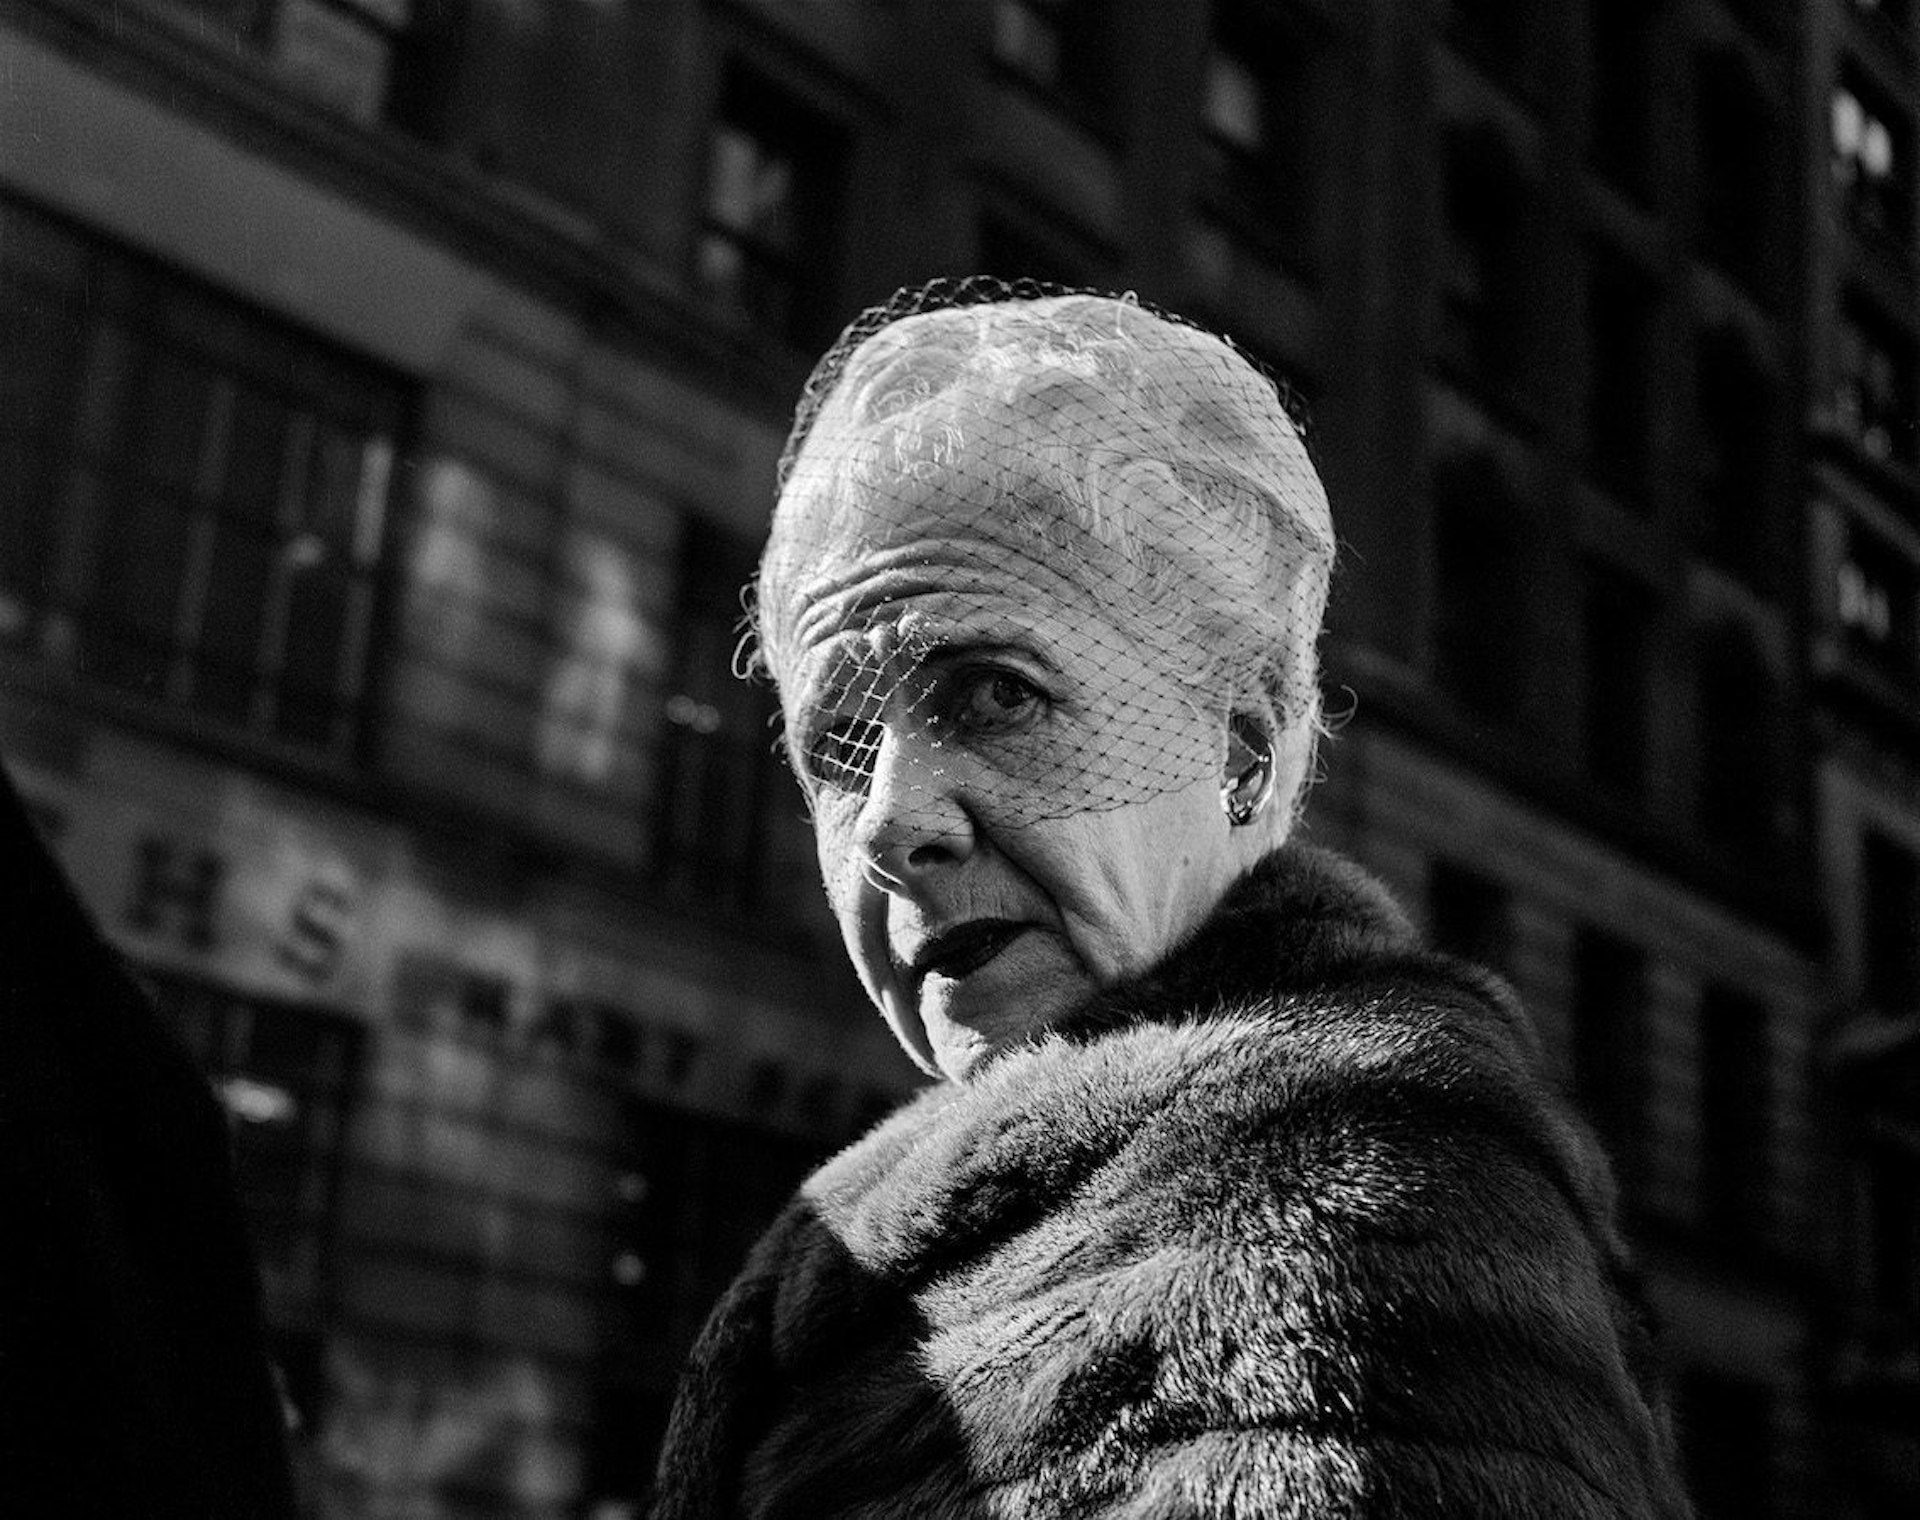 How Vivian Maier transformed street photography